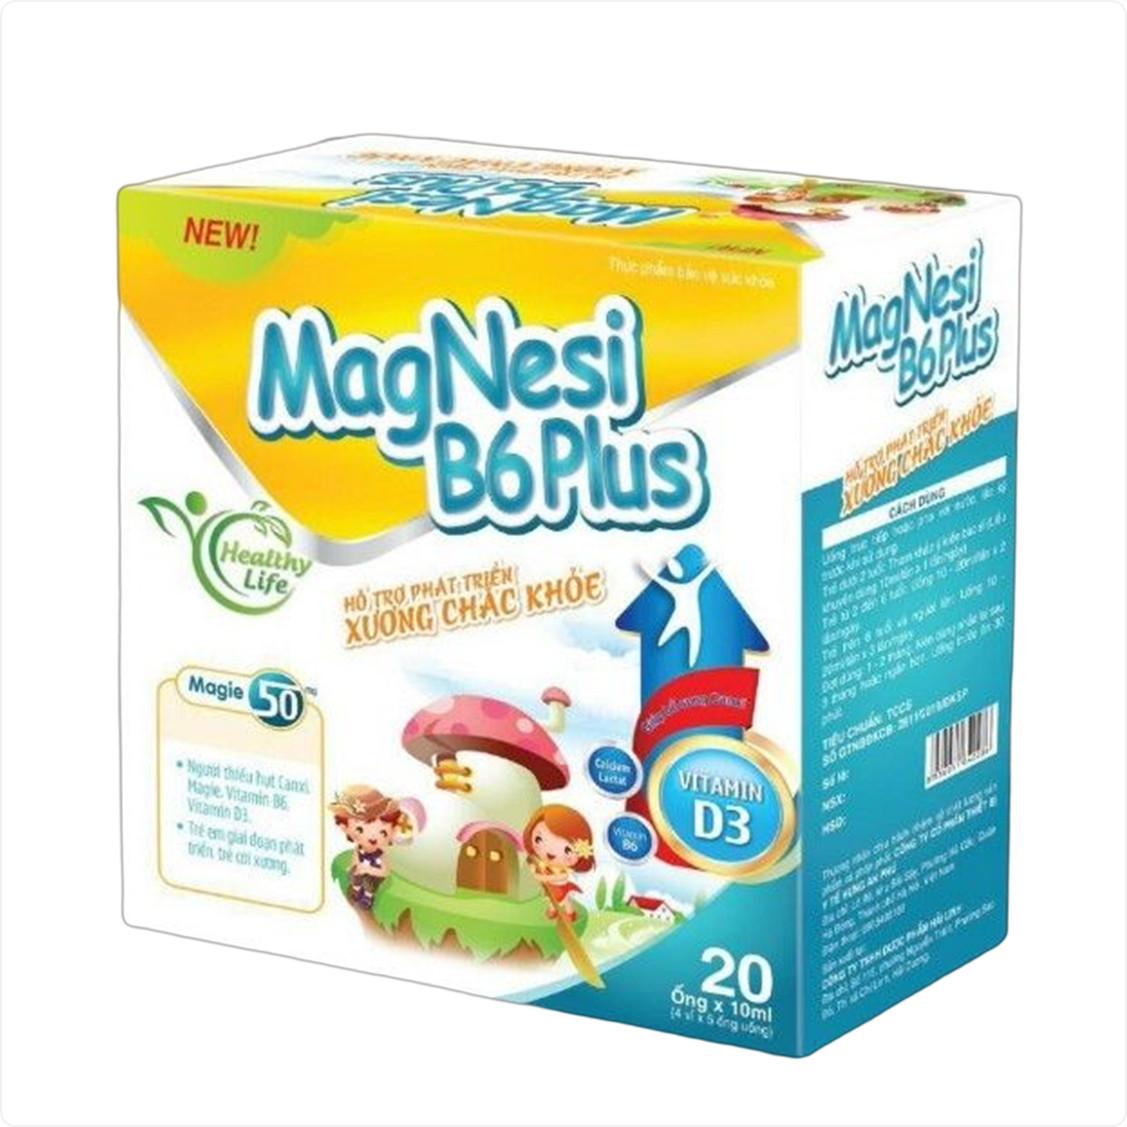 Siro canxi Magnesi B6 Plus giúp bổ sung canxi, magie, B6